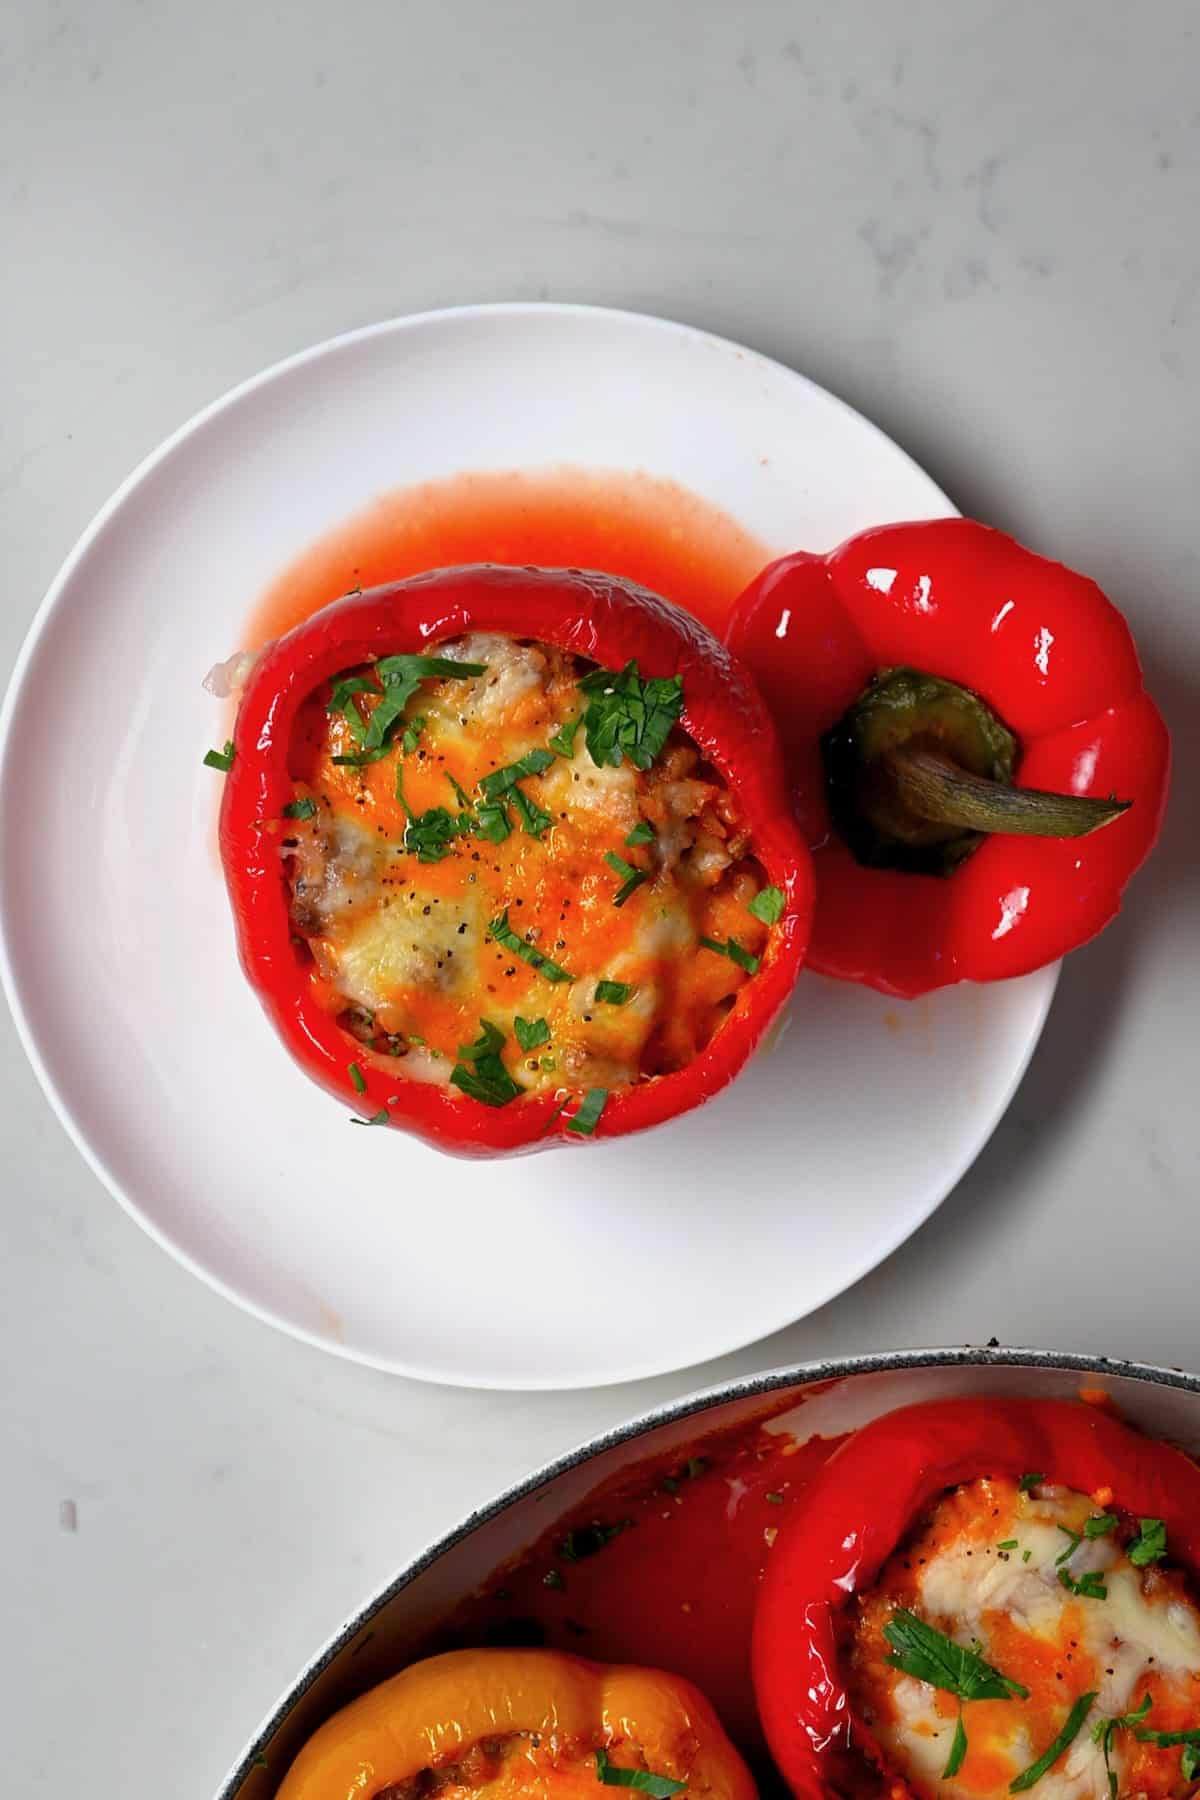 A serving of stuffed red bell pepper